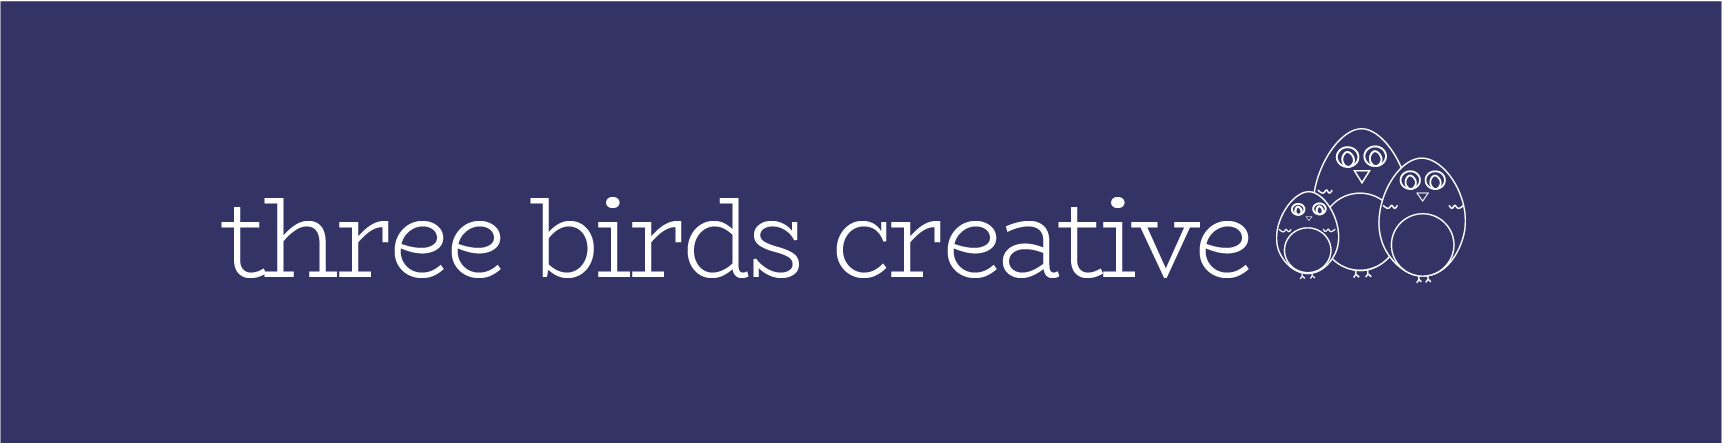 three birds creative logo